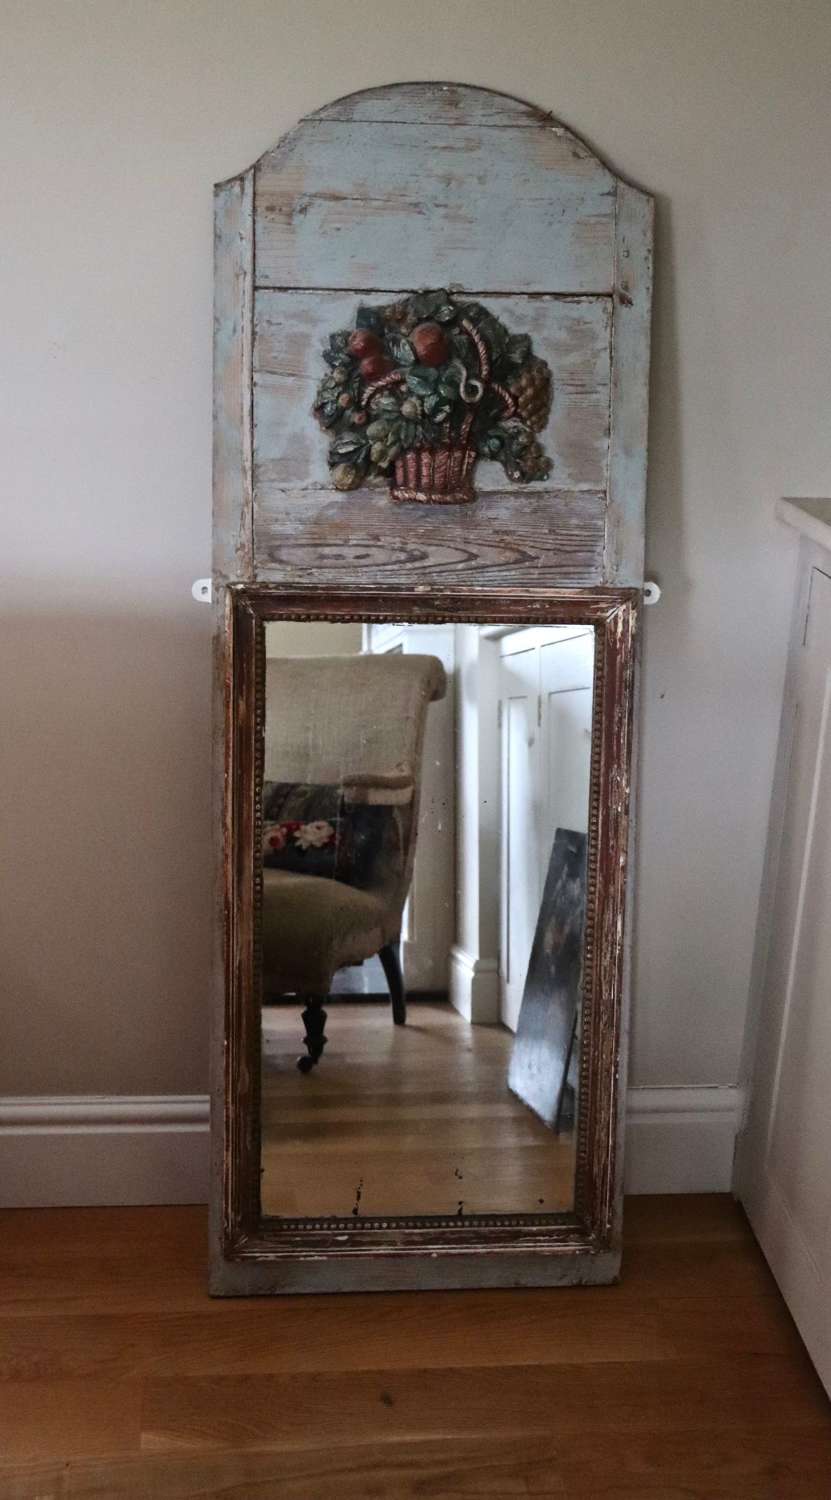 19th century French mirror